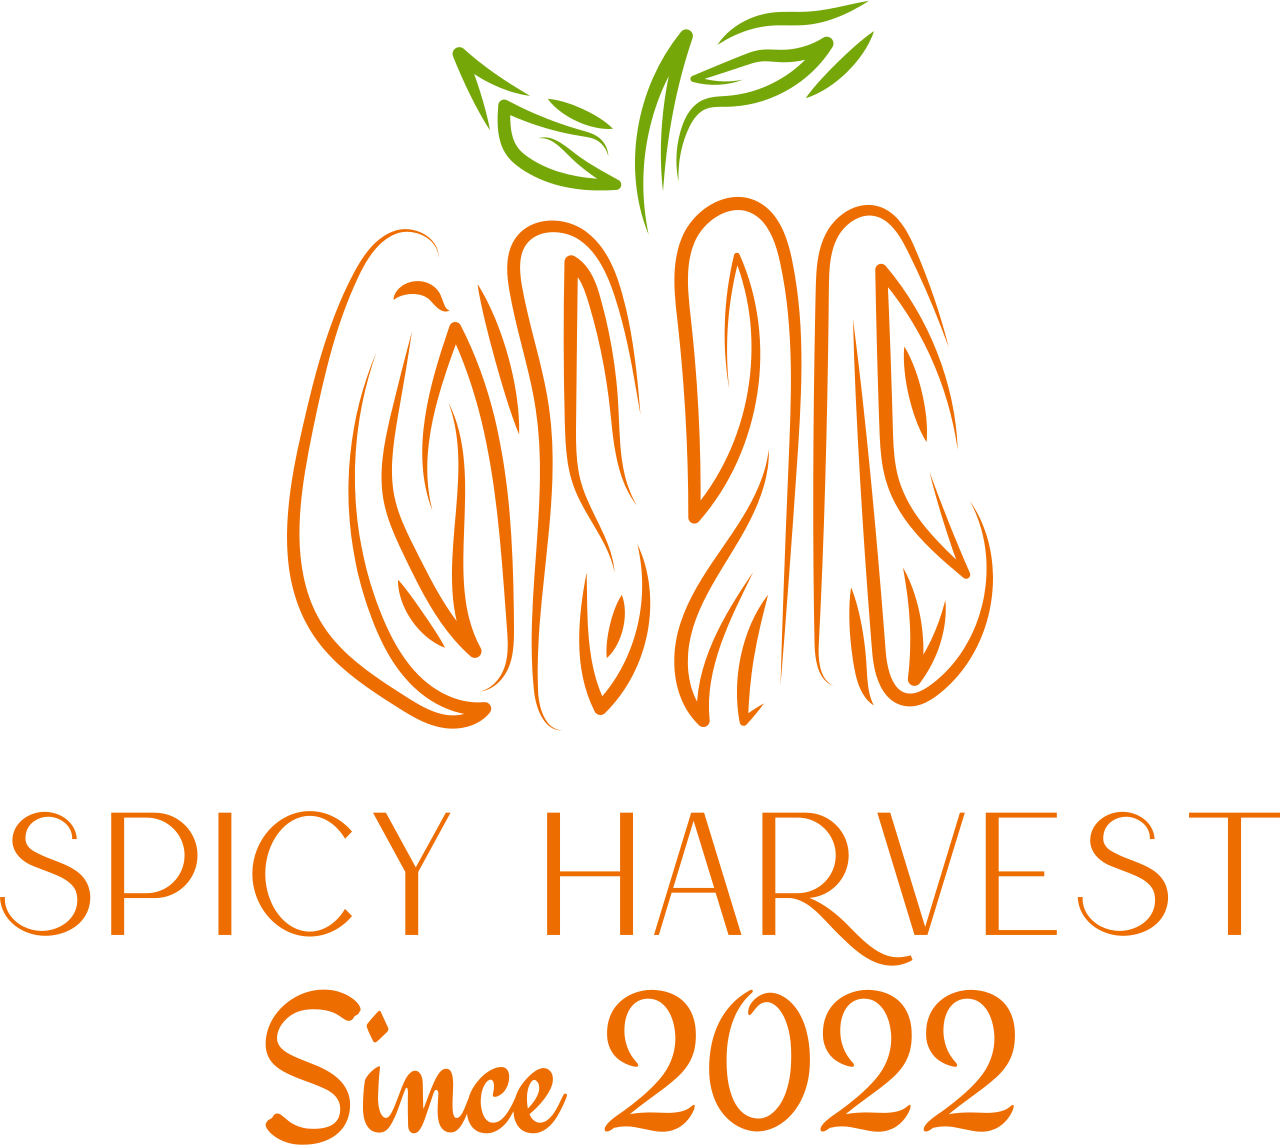 SpicyHarvest's logo